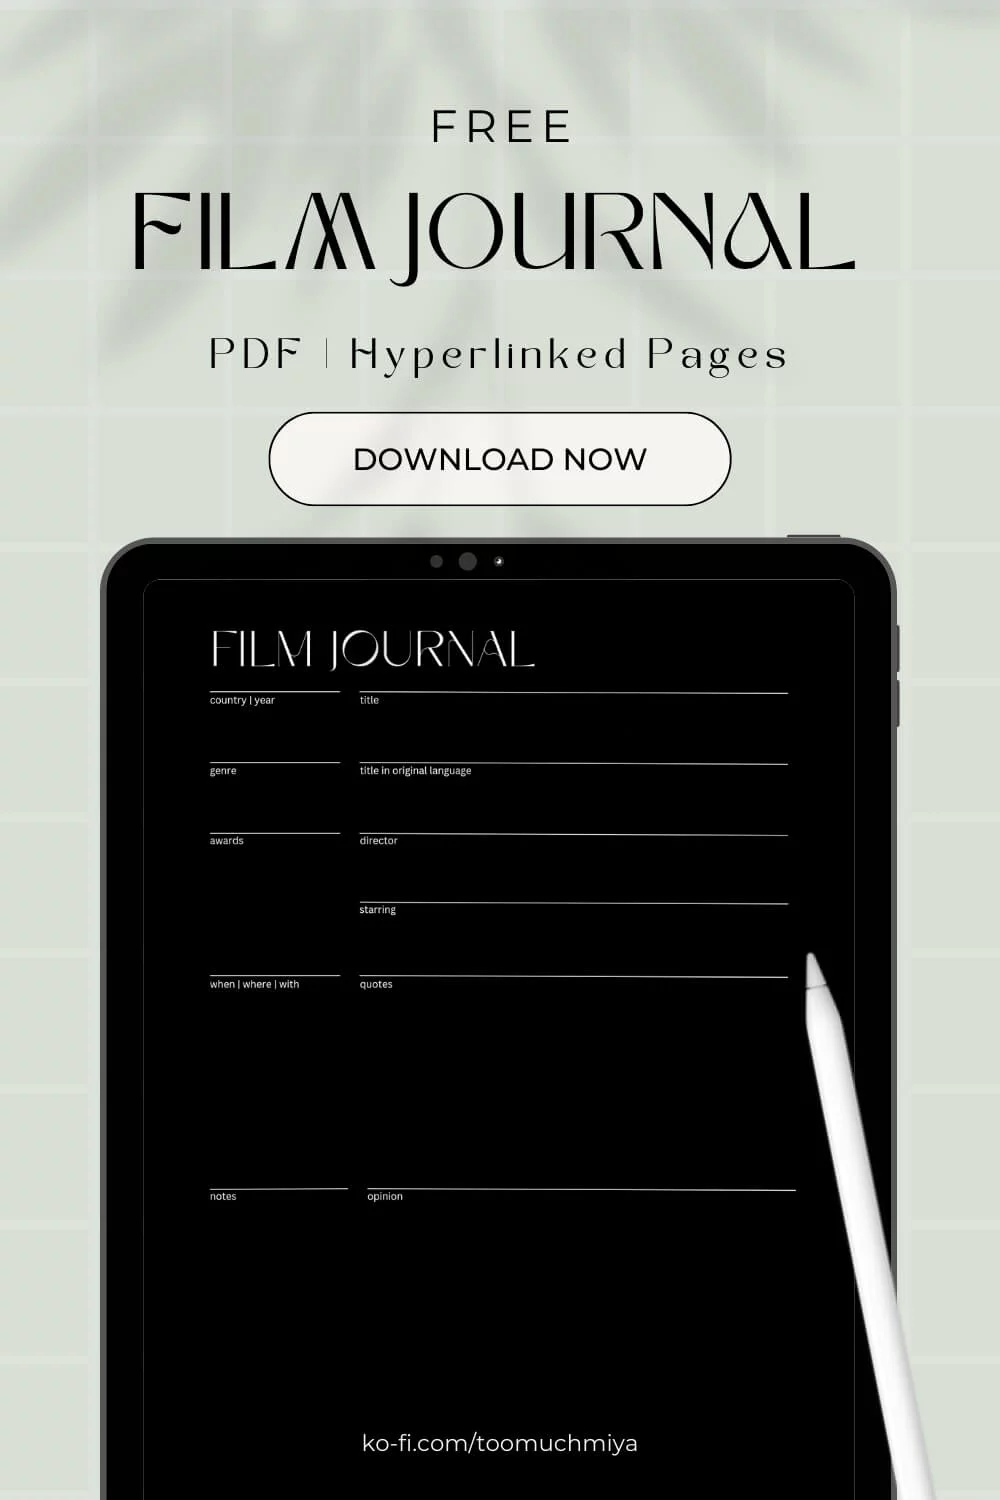 free digital travel planner pdf